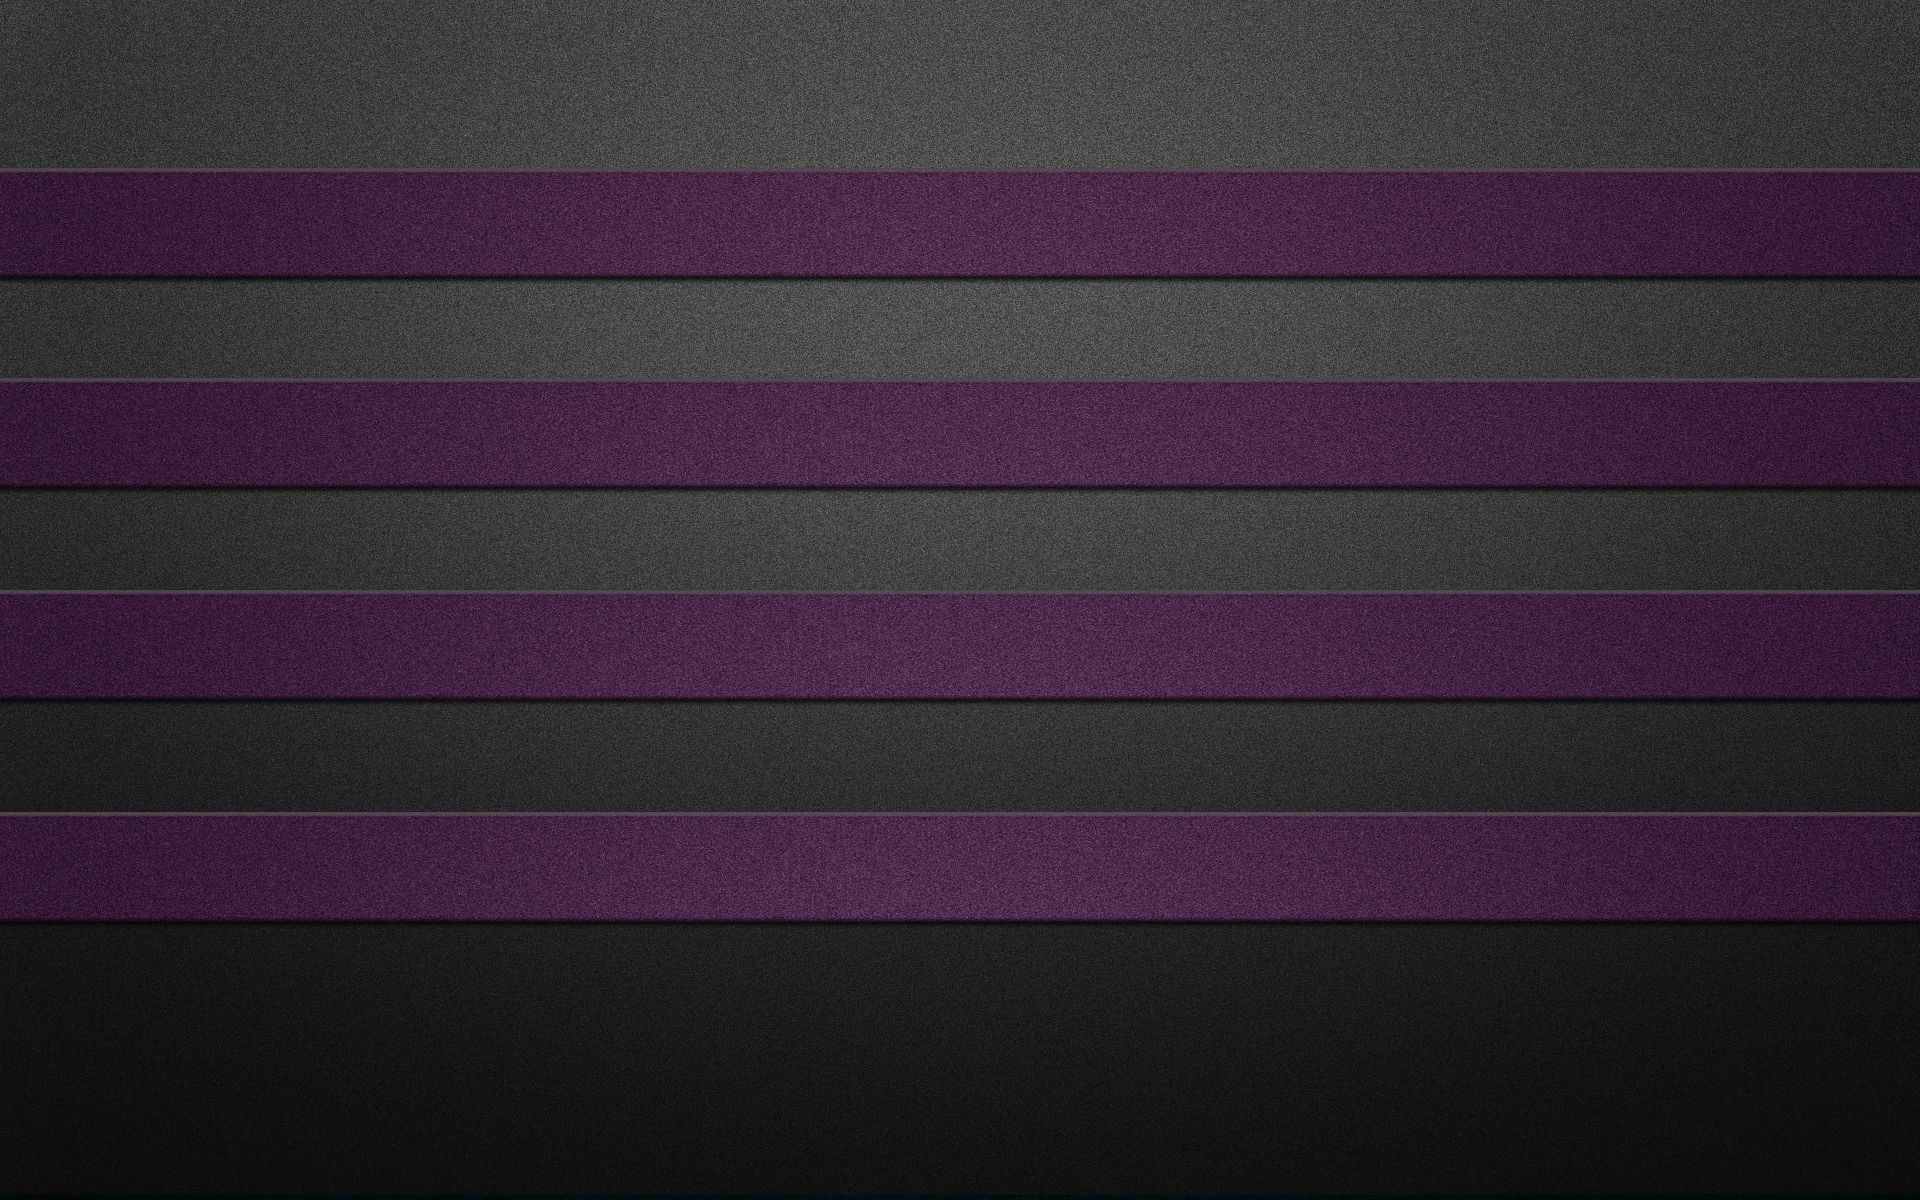 black and white, textures, texture, violet, stripes, streaks, purple, four